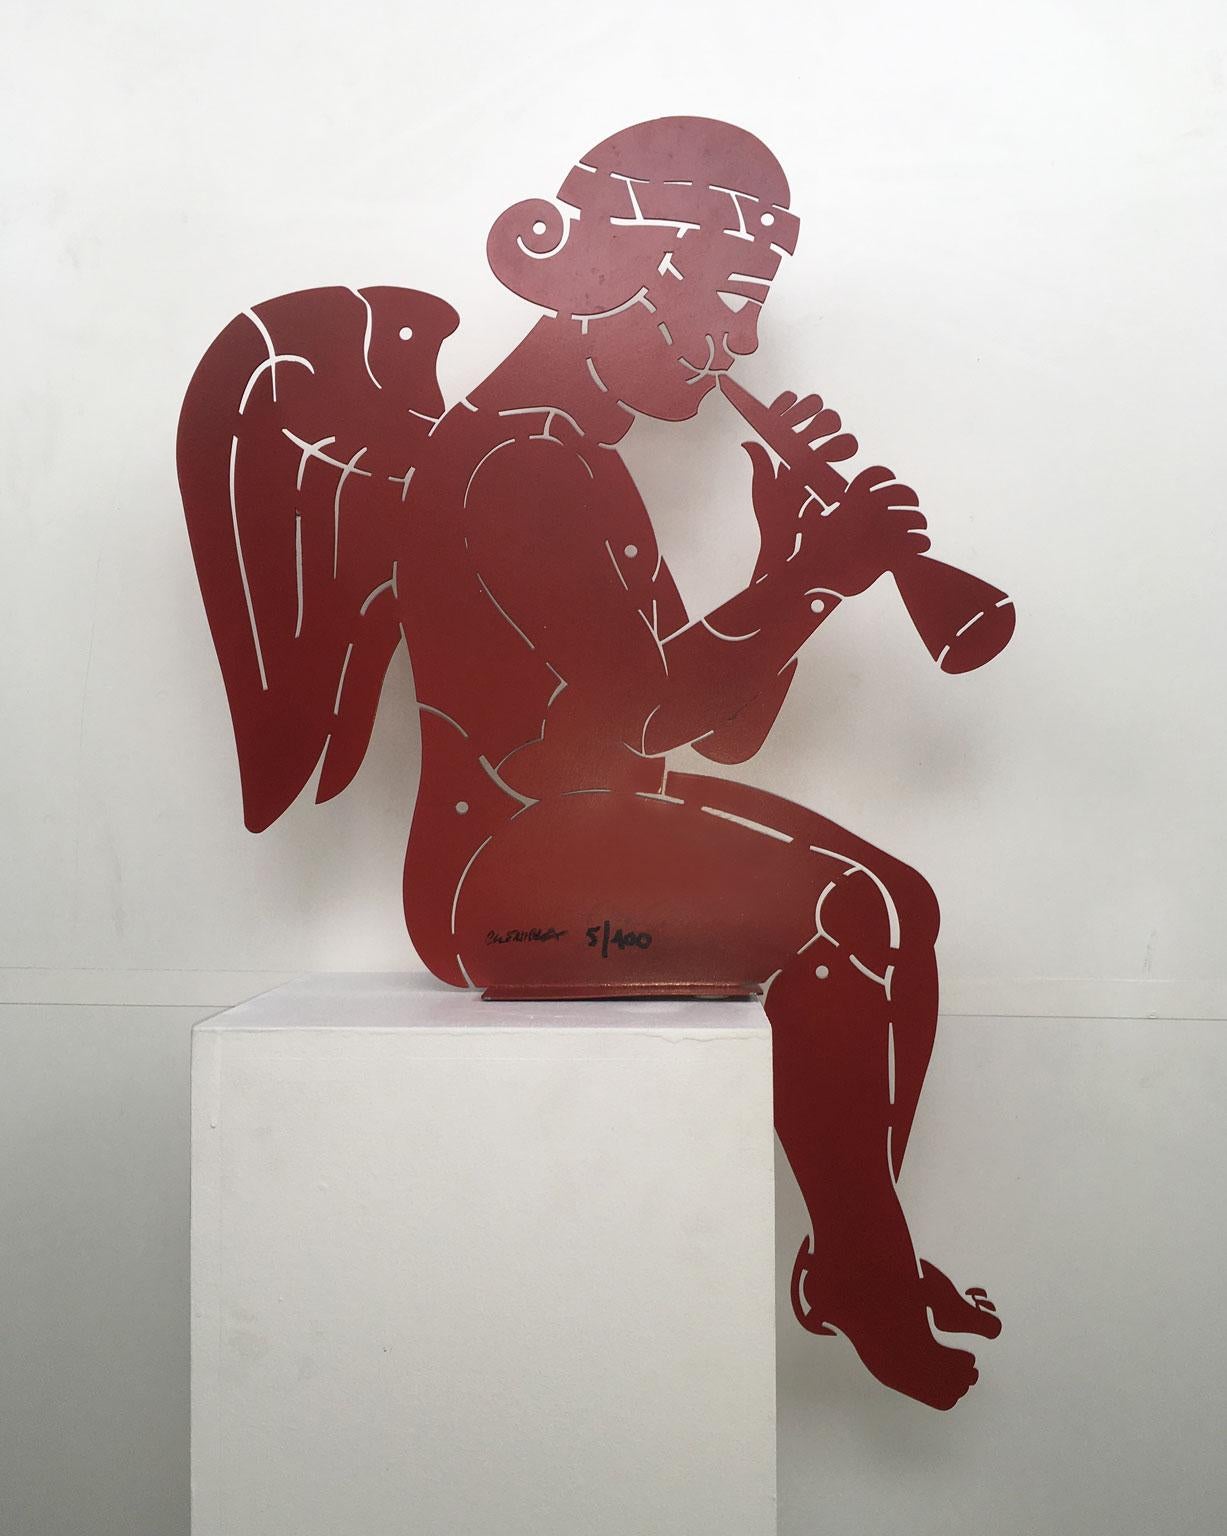 Italy 1980 Post-Modern Abstract Sculpture Bruno Chersicla Cherubino Ruggine For Sale 8